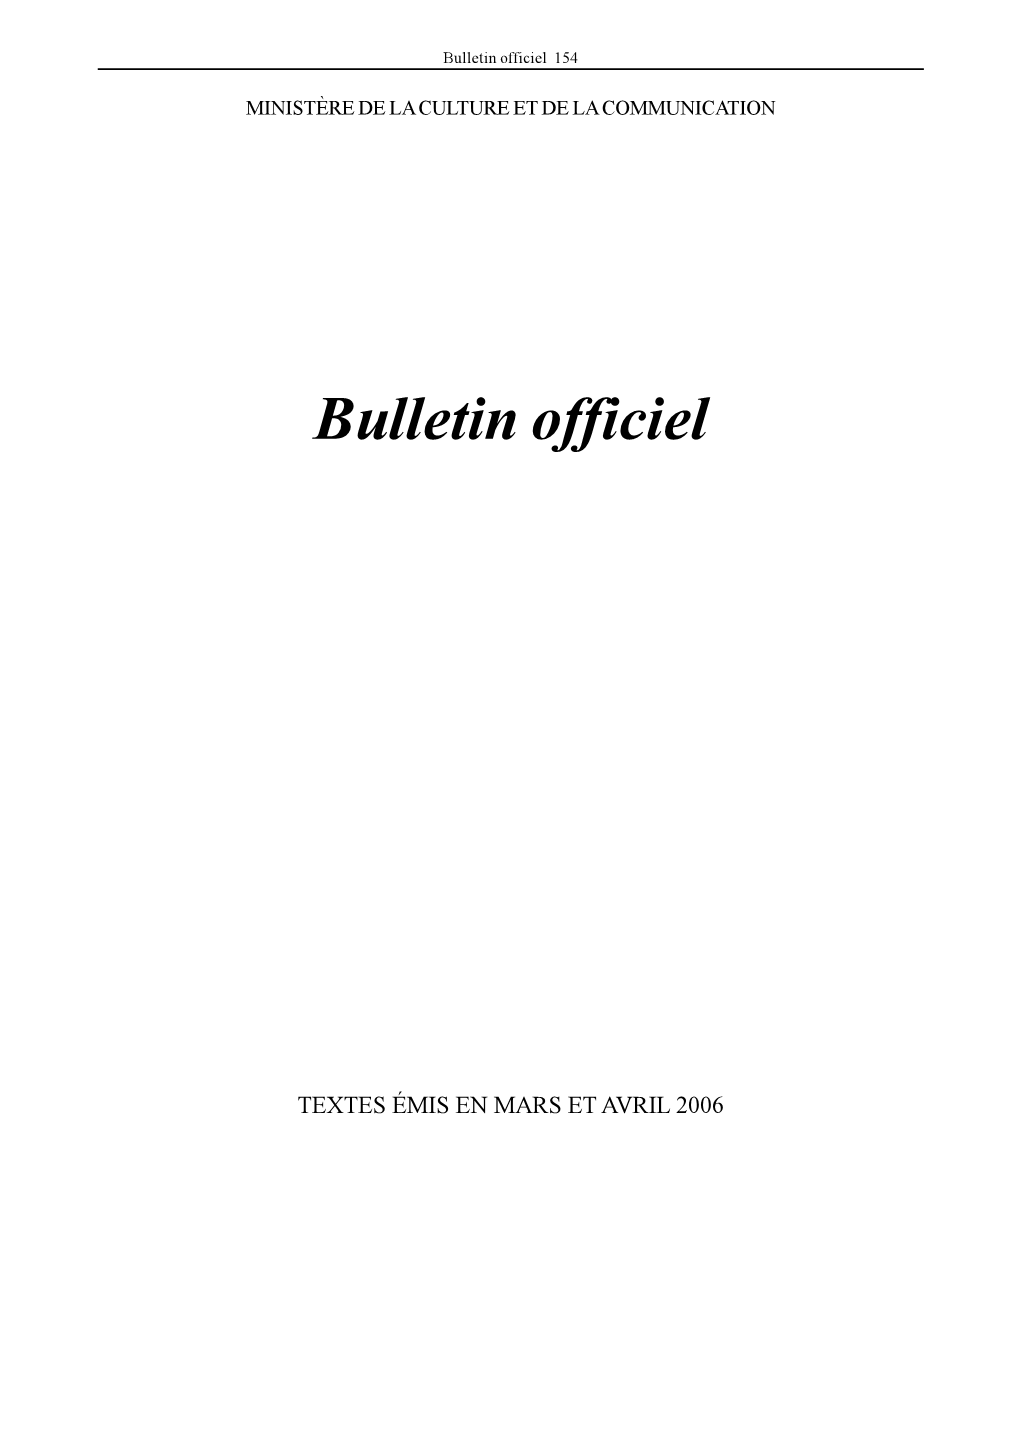 Bulletin Officiel 154